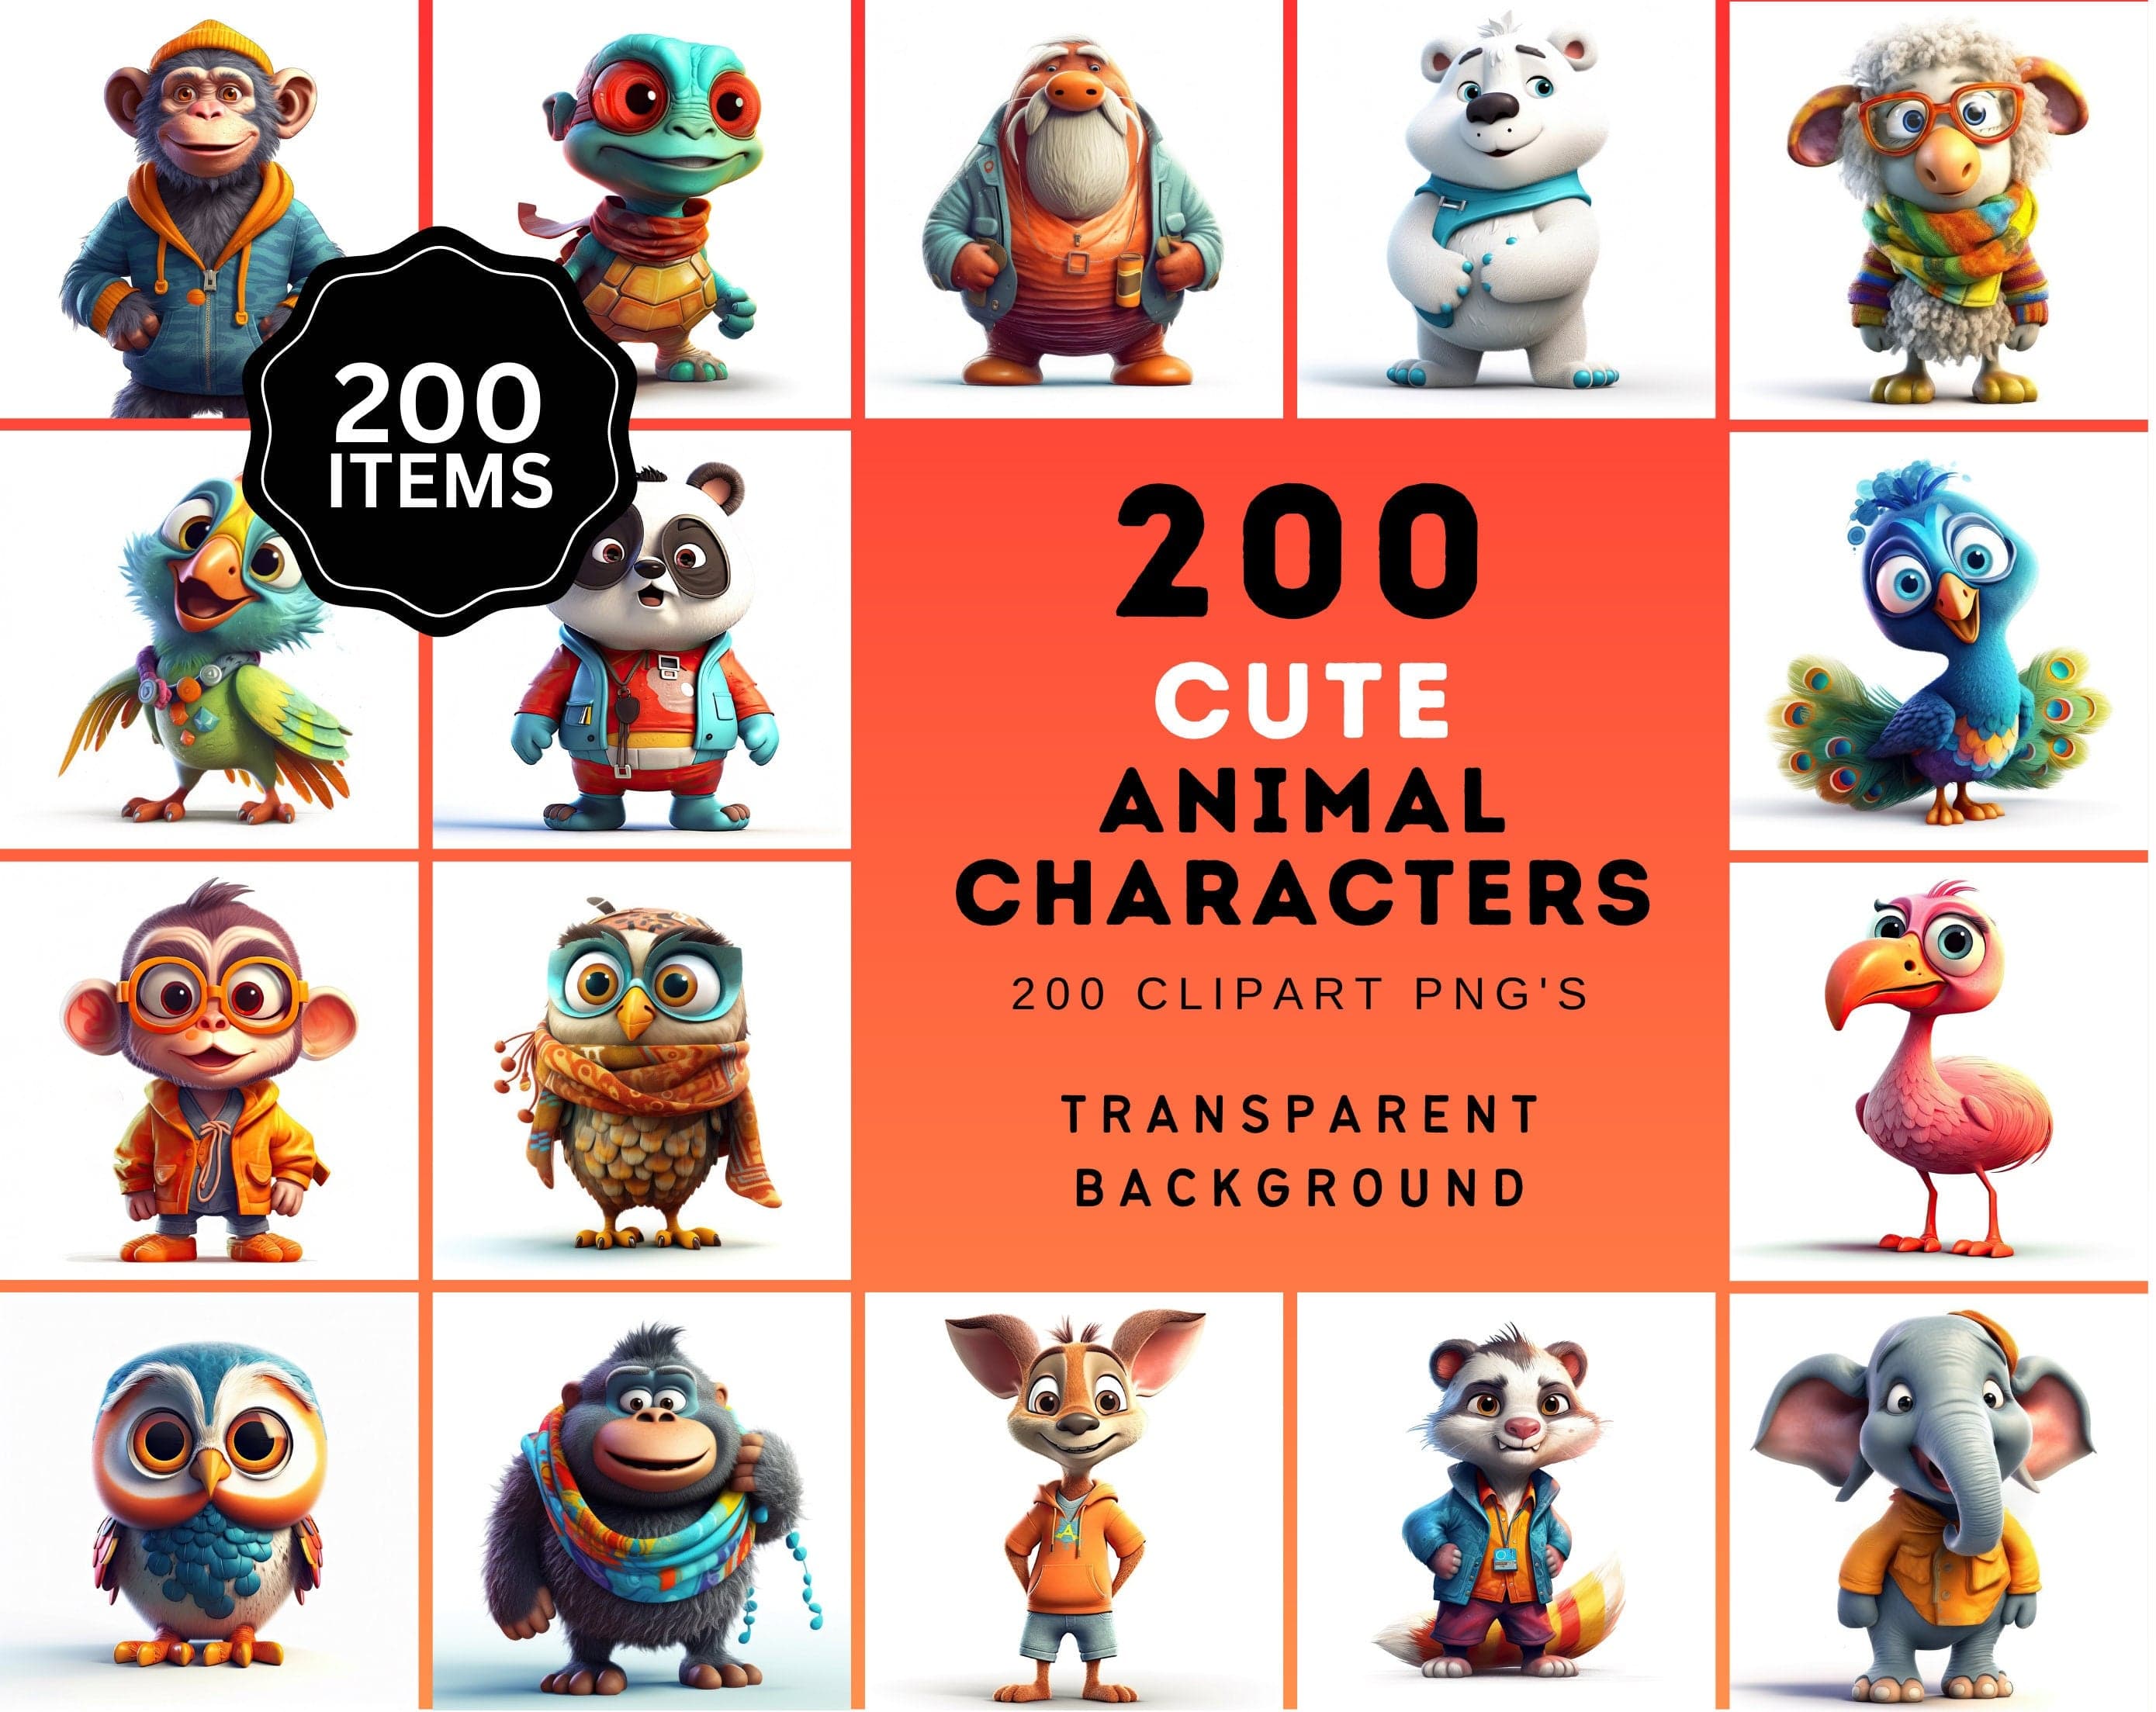 200 Adorable 3D Animal Clipart Bundle, Cute Transparent Background Images, Perfect for DIY Crafts, Scrapbooking & More Digital Download Sumobundle